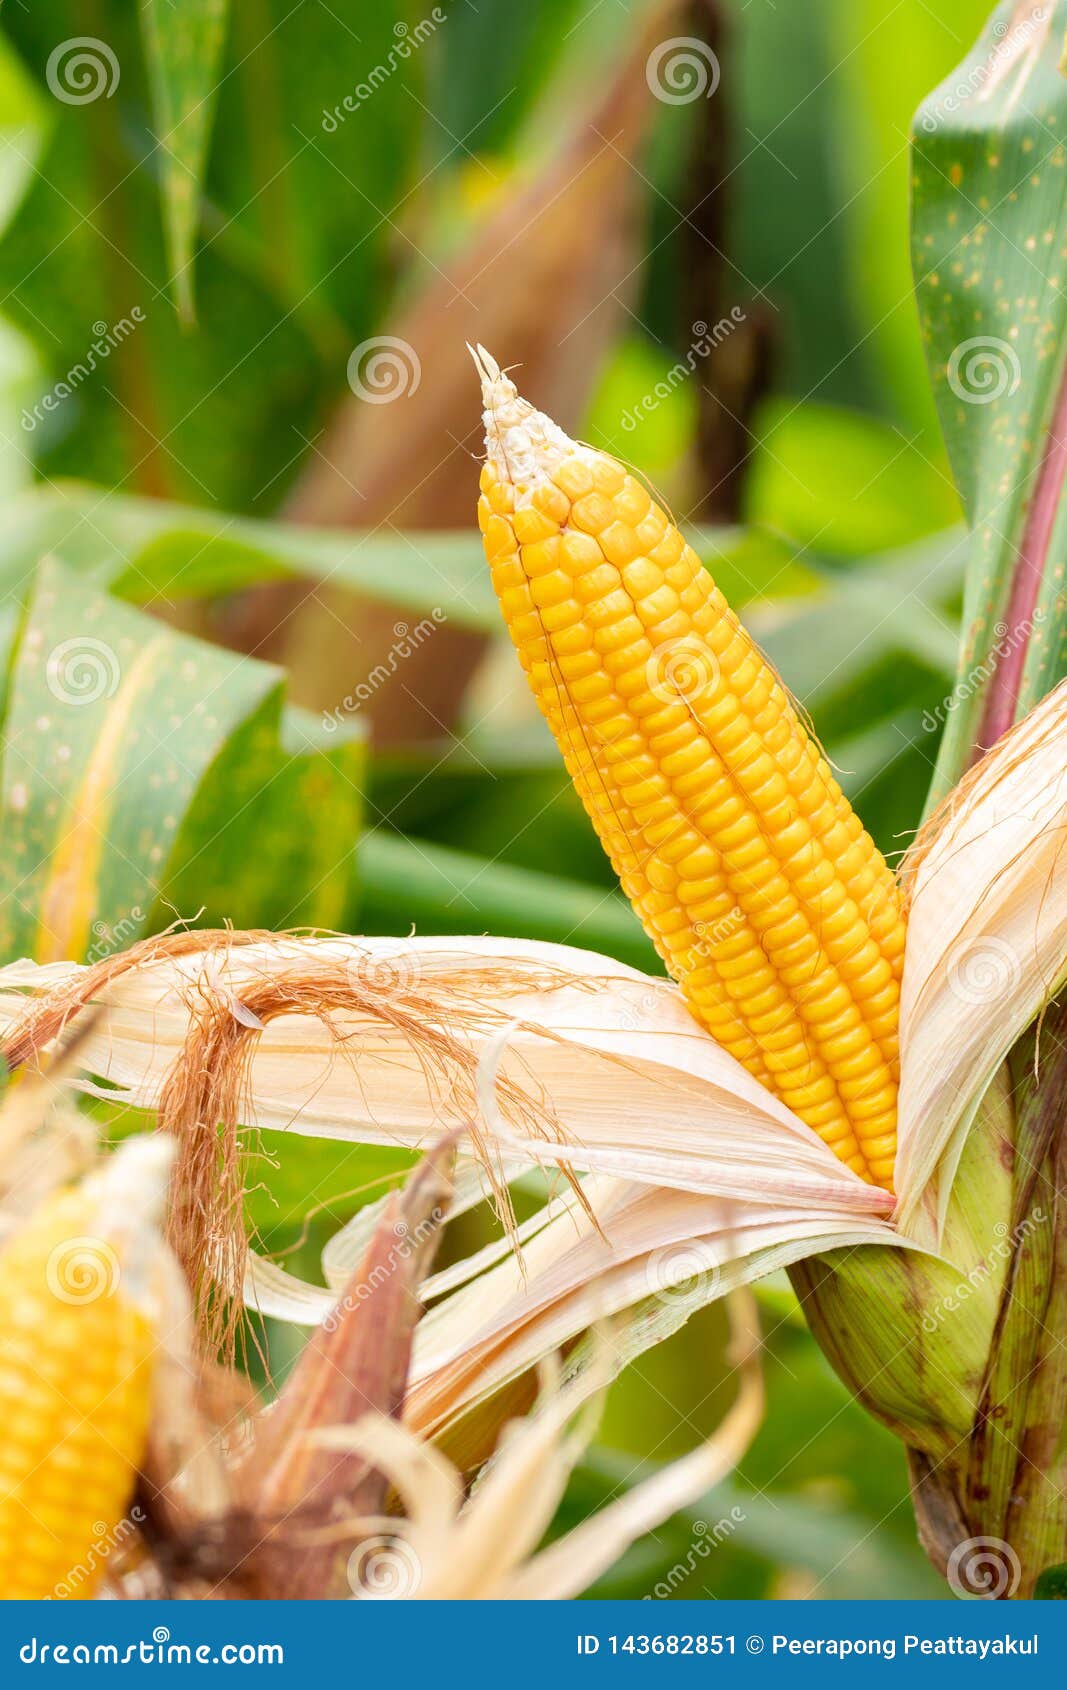 yellow cob of sweet corn on the field. collect corn crop